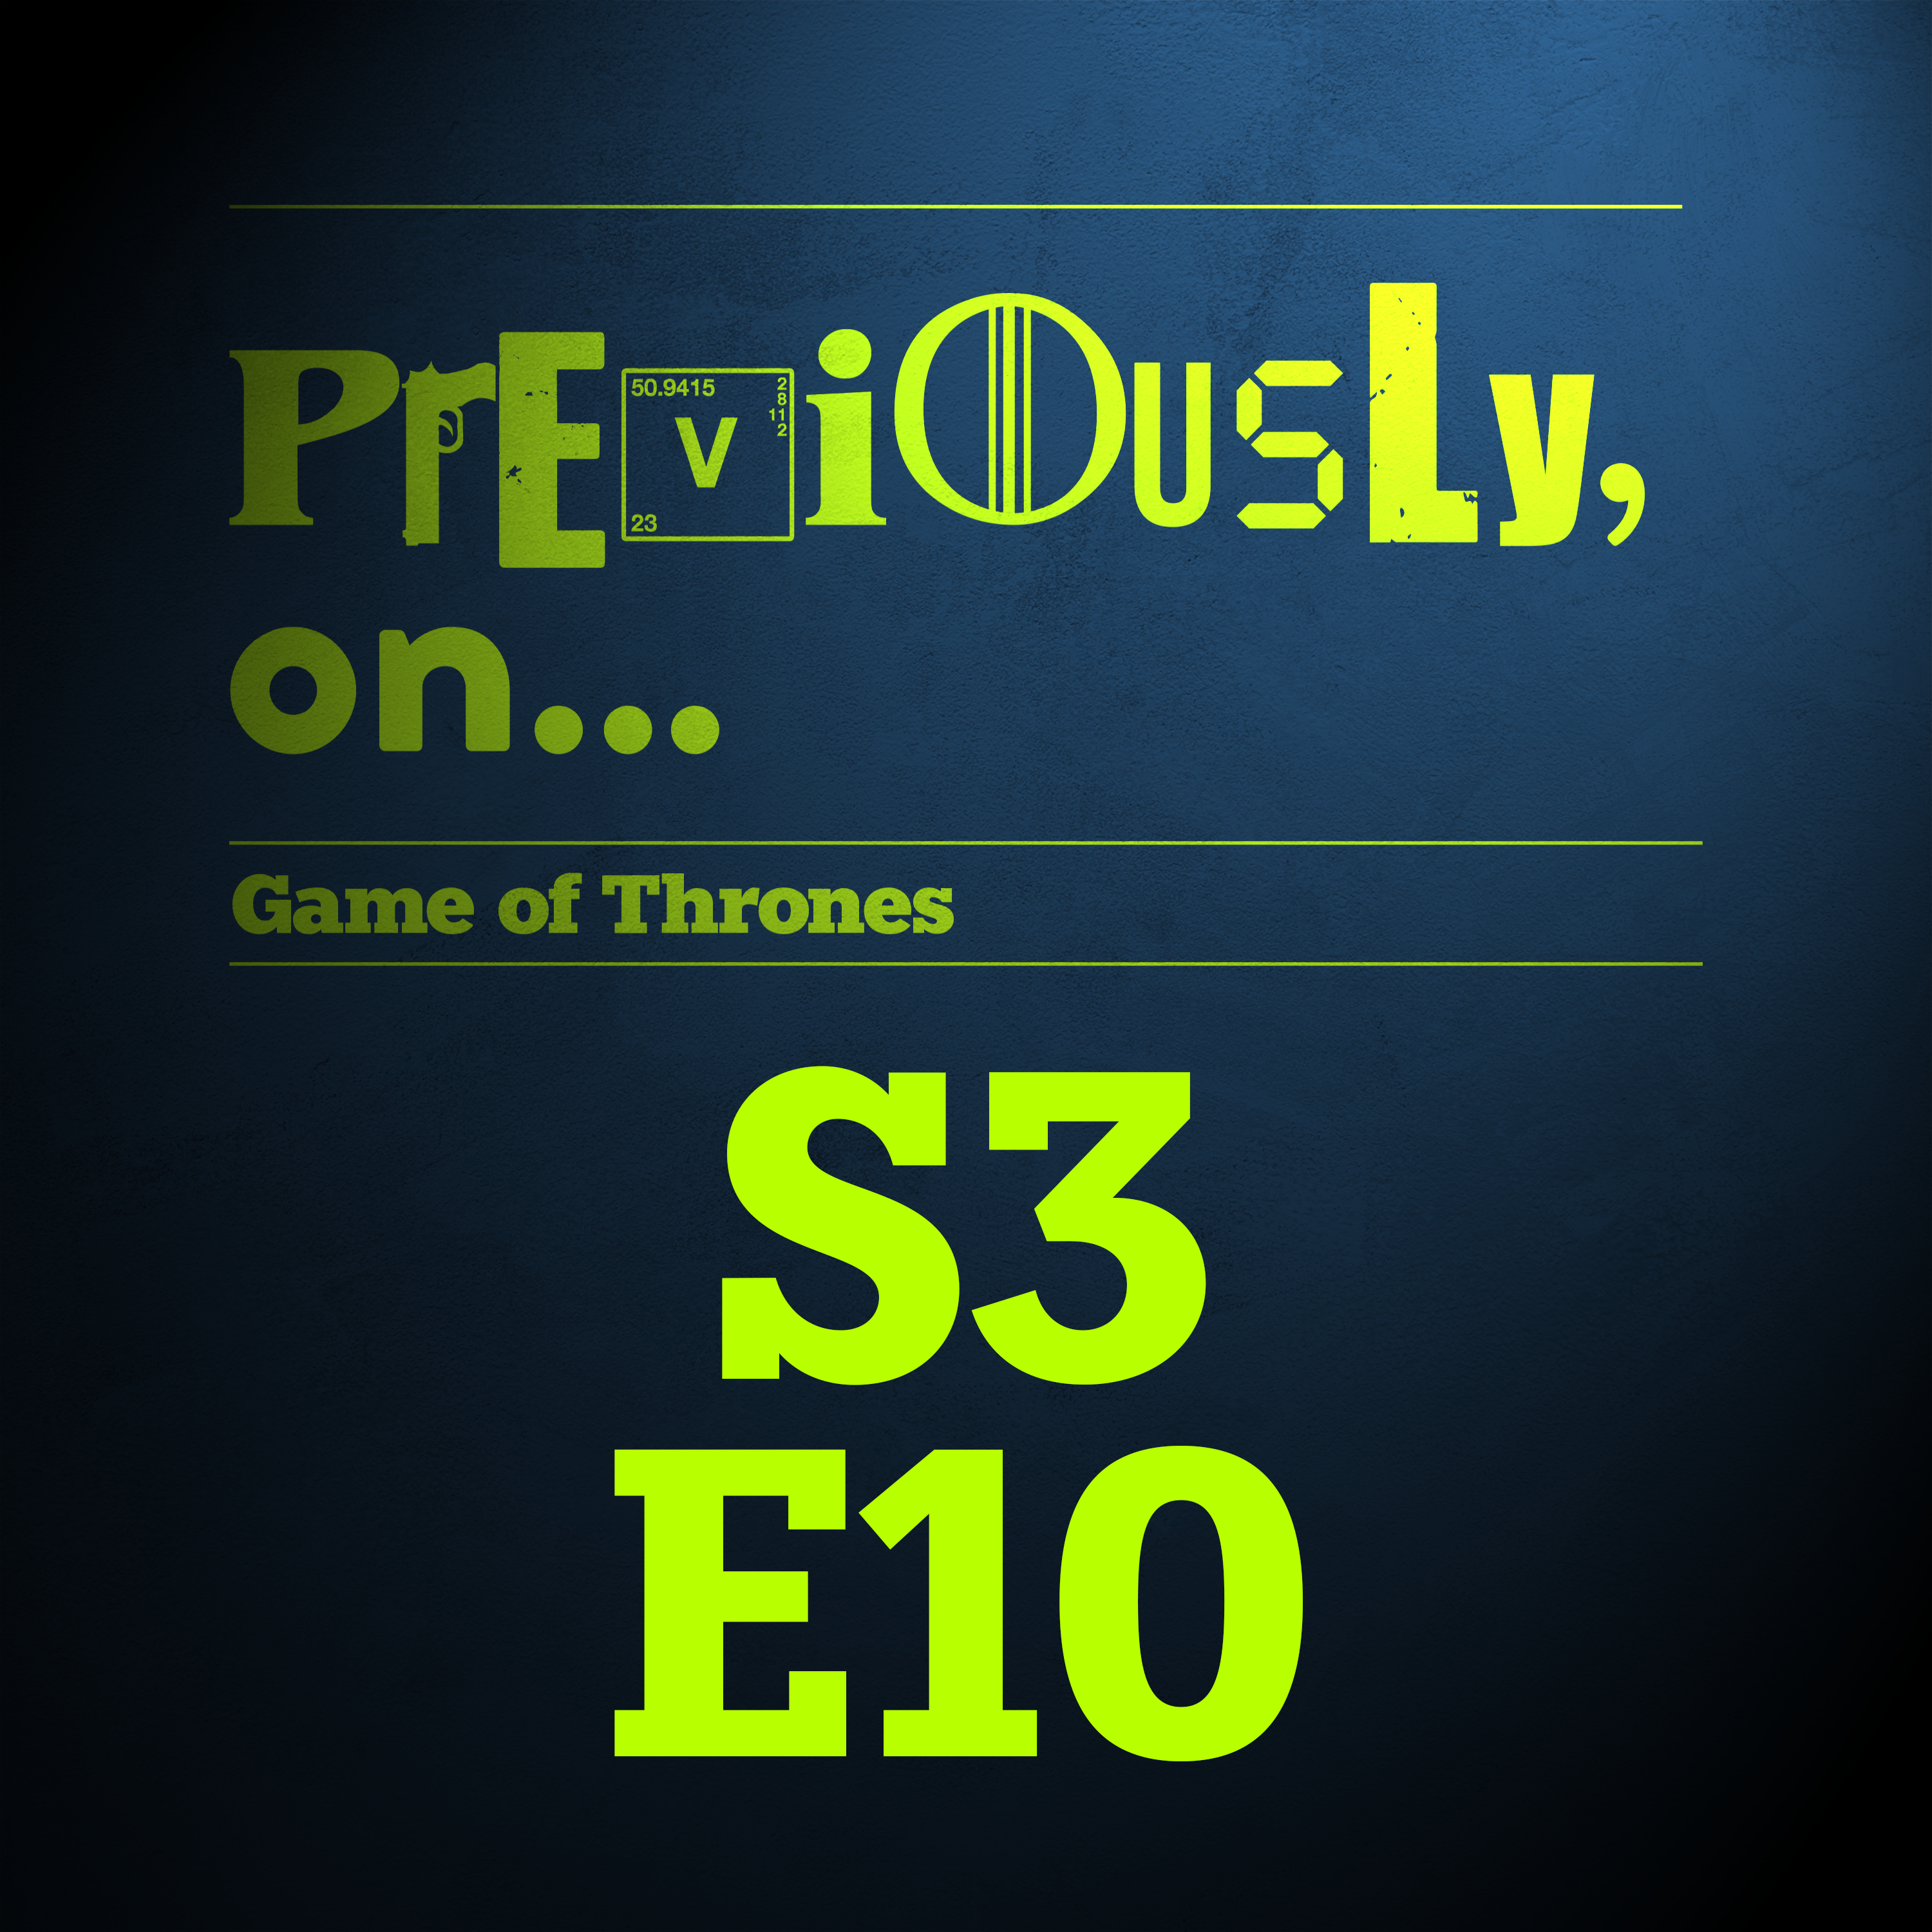 Game of Thrones S3E10 - Mhysa